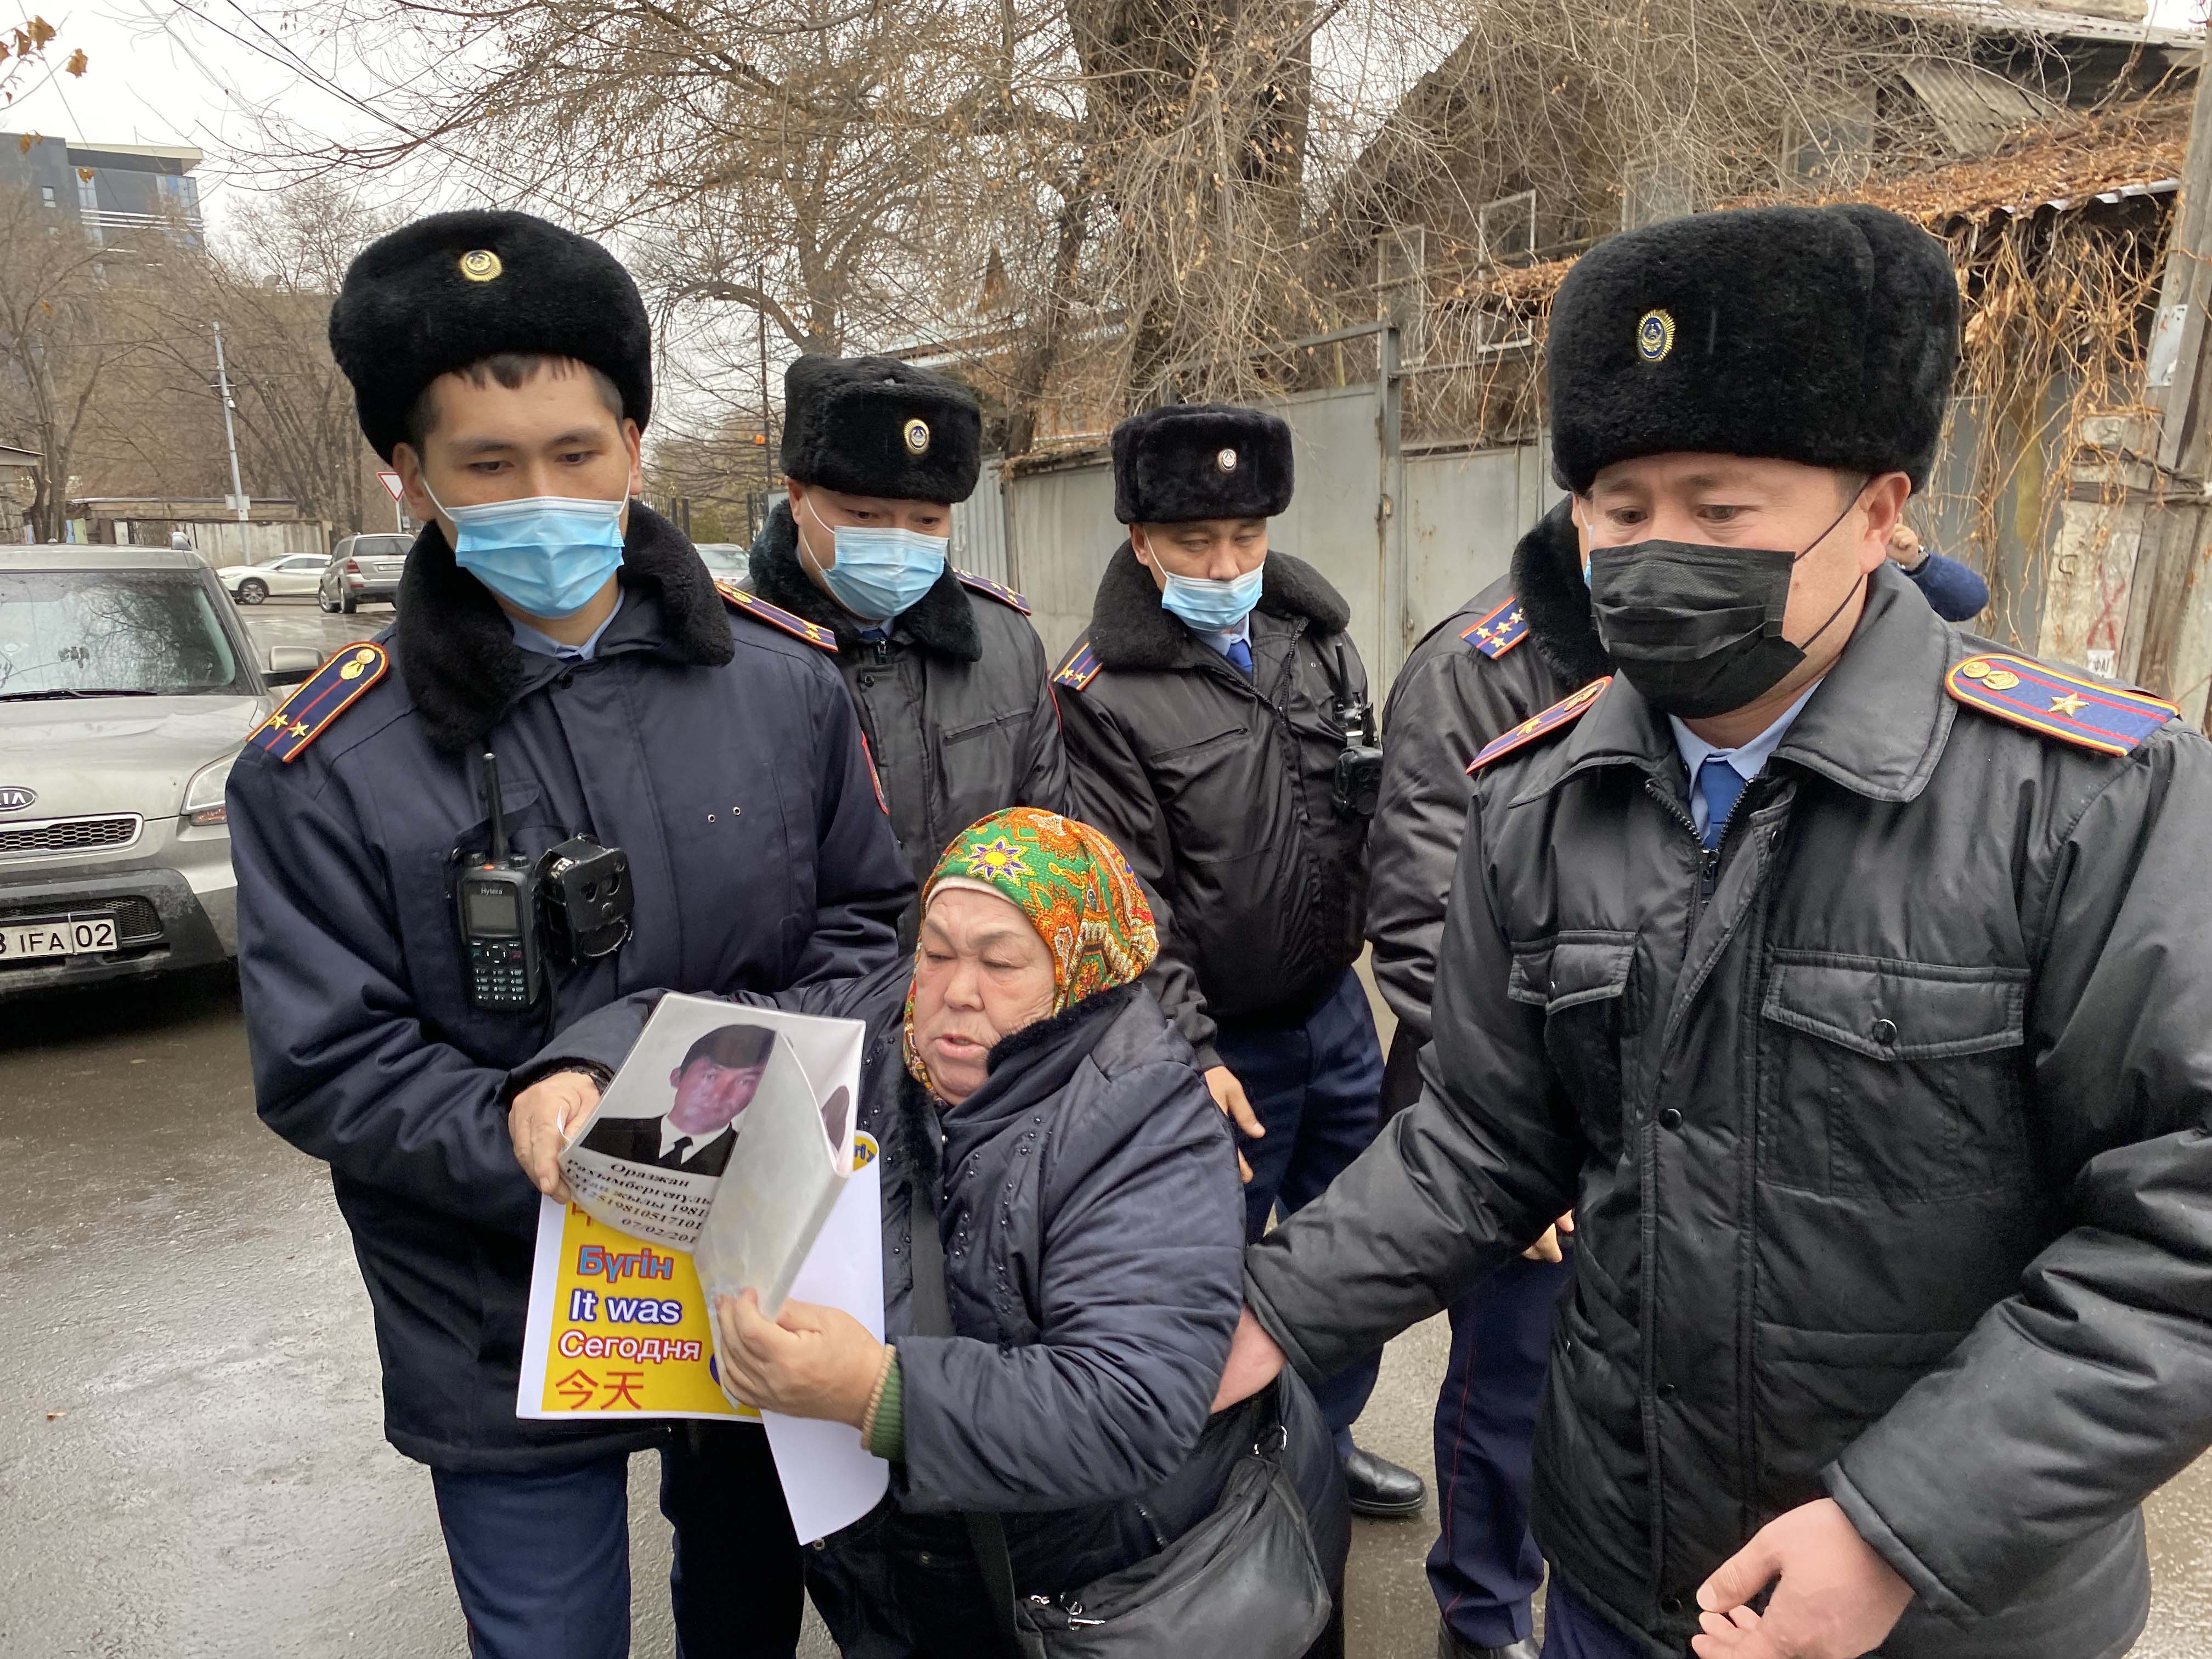 Kazakhstan: Lindungi Hak Asasi Manusia Selama Krisis